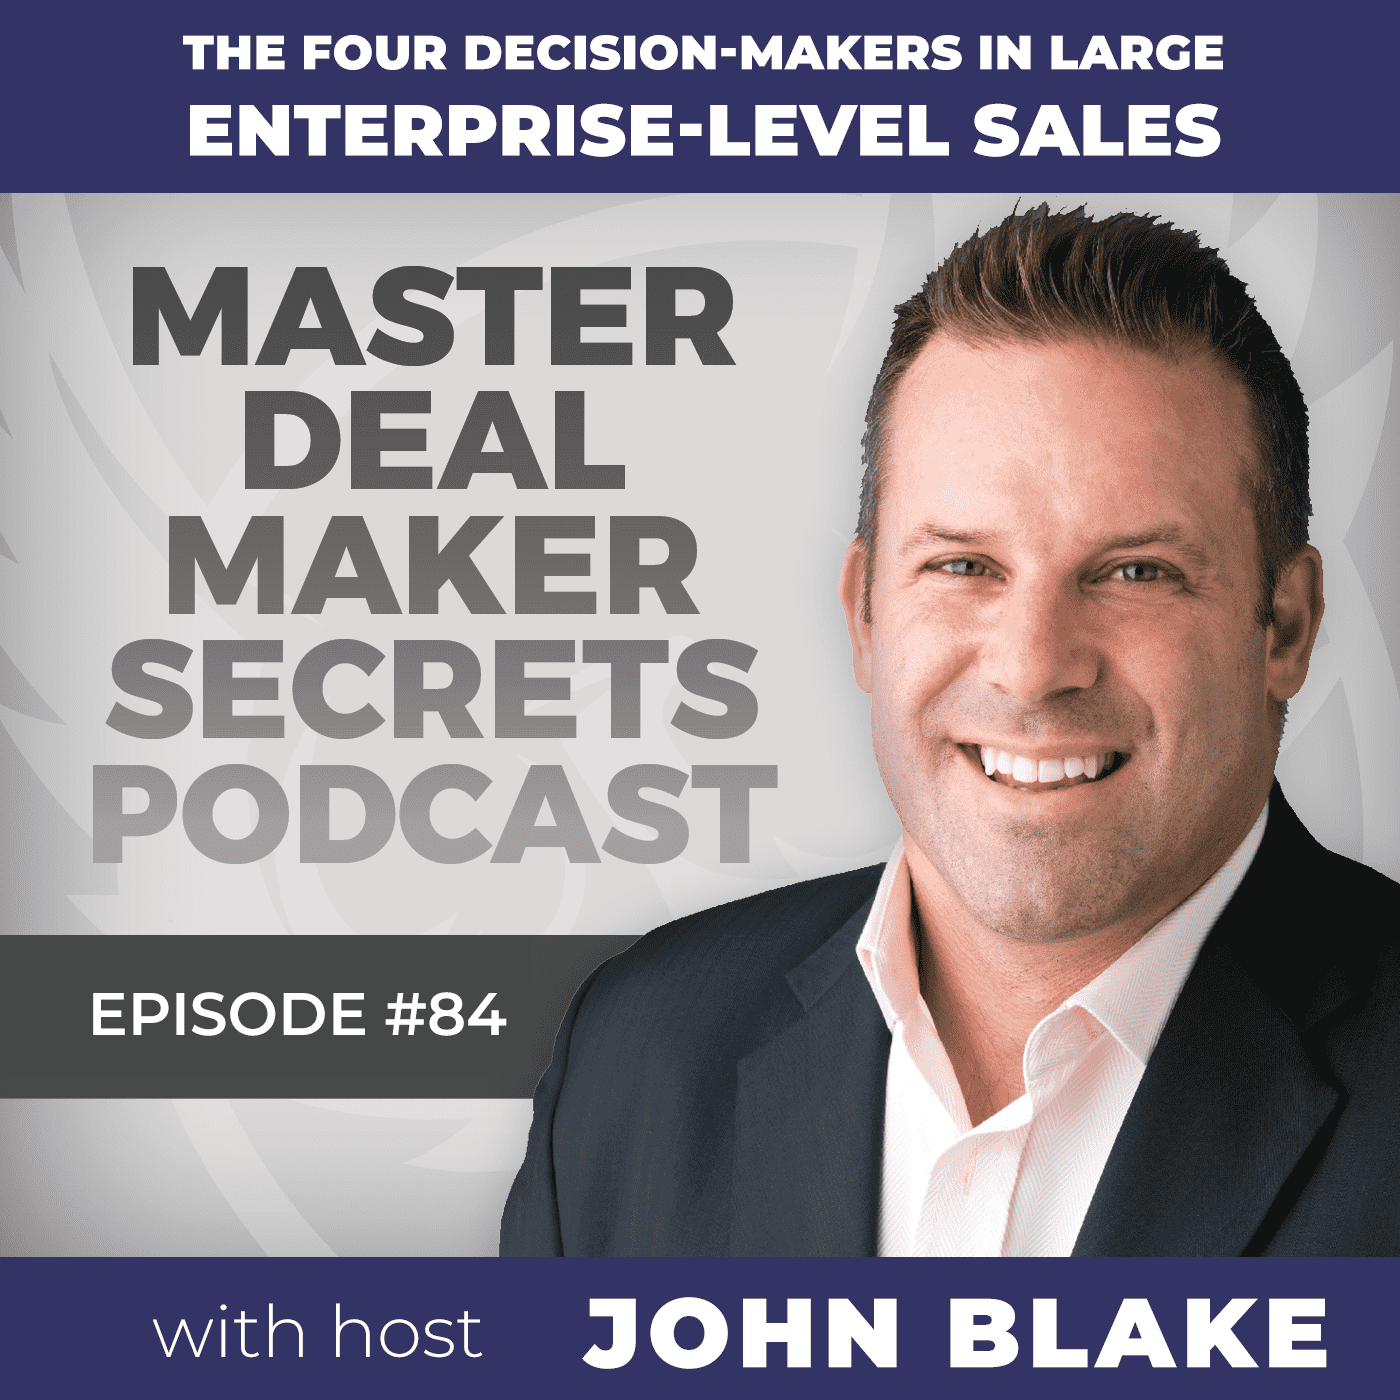 John Blake The Four Decision-Makers in Large Enterprise-Level Sales